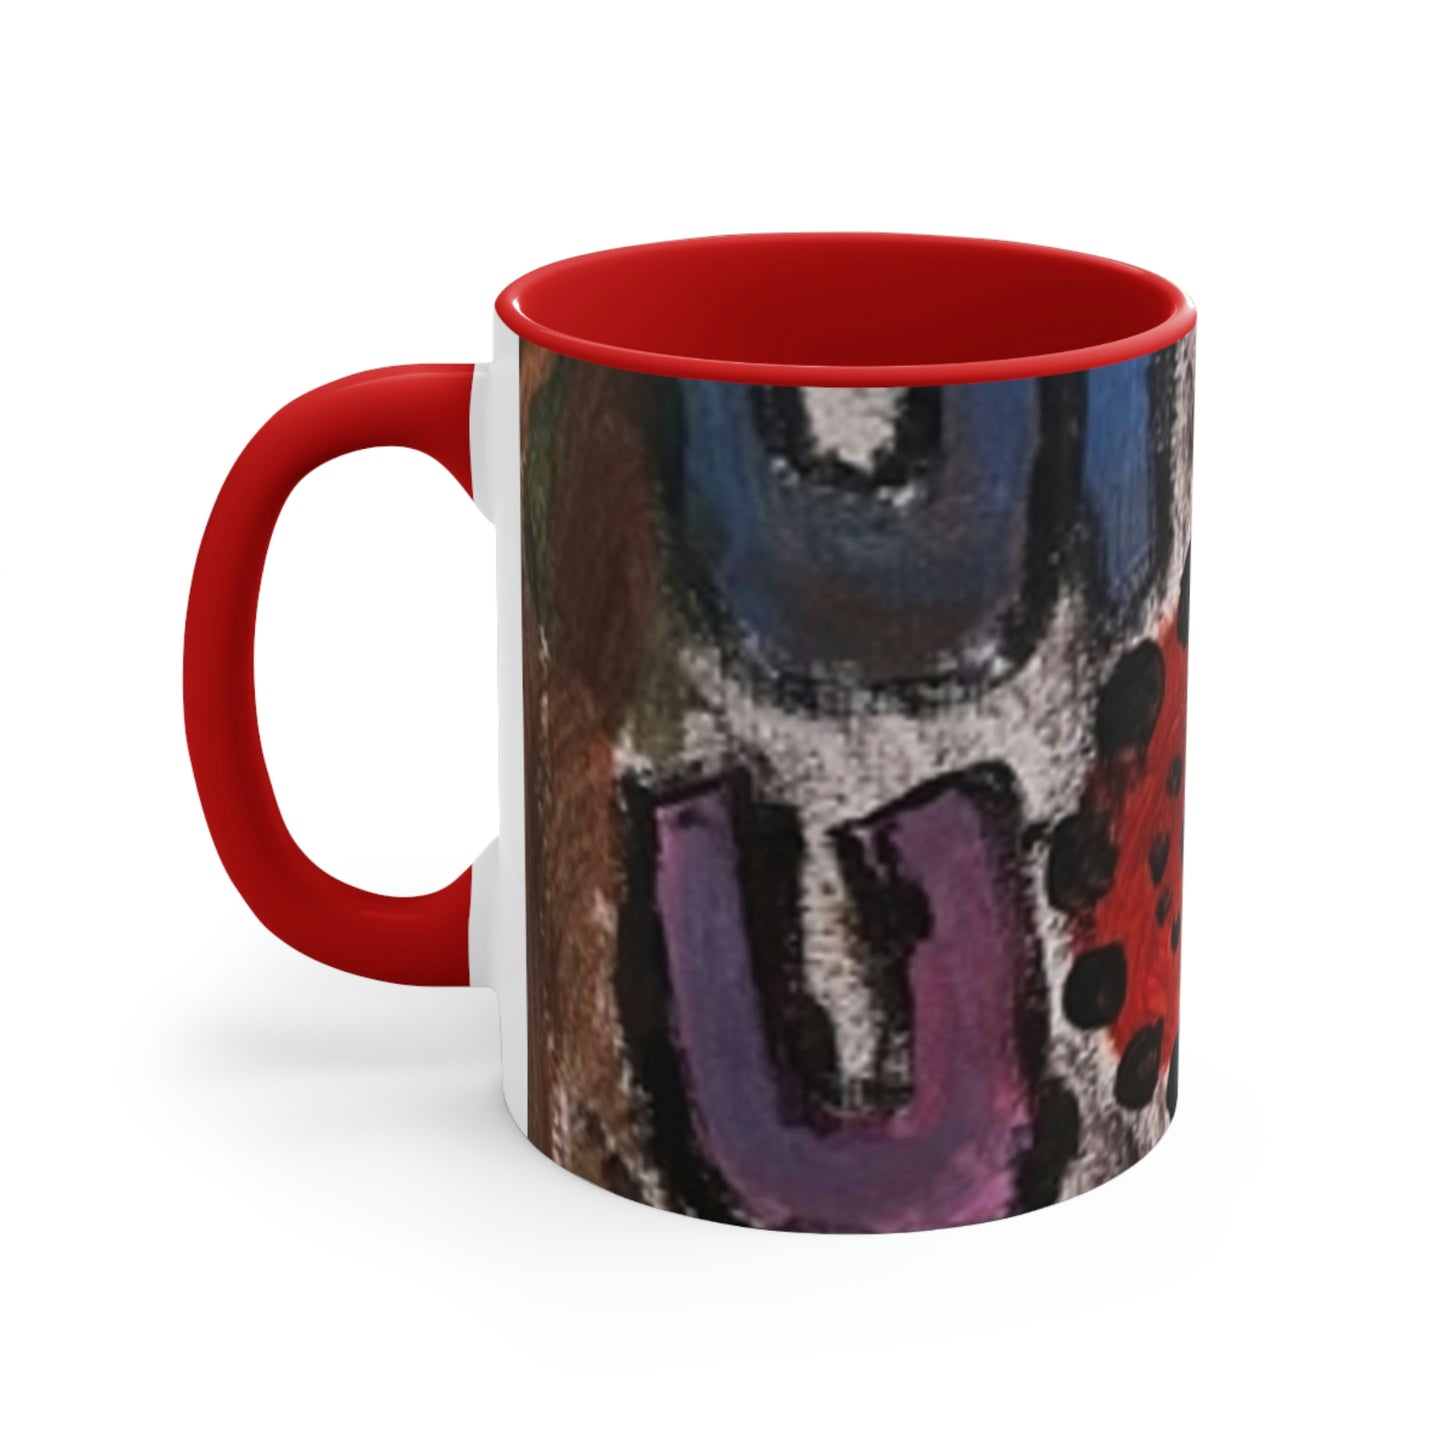 Colorful Accent Mugs with Nhuralama art print design